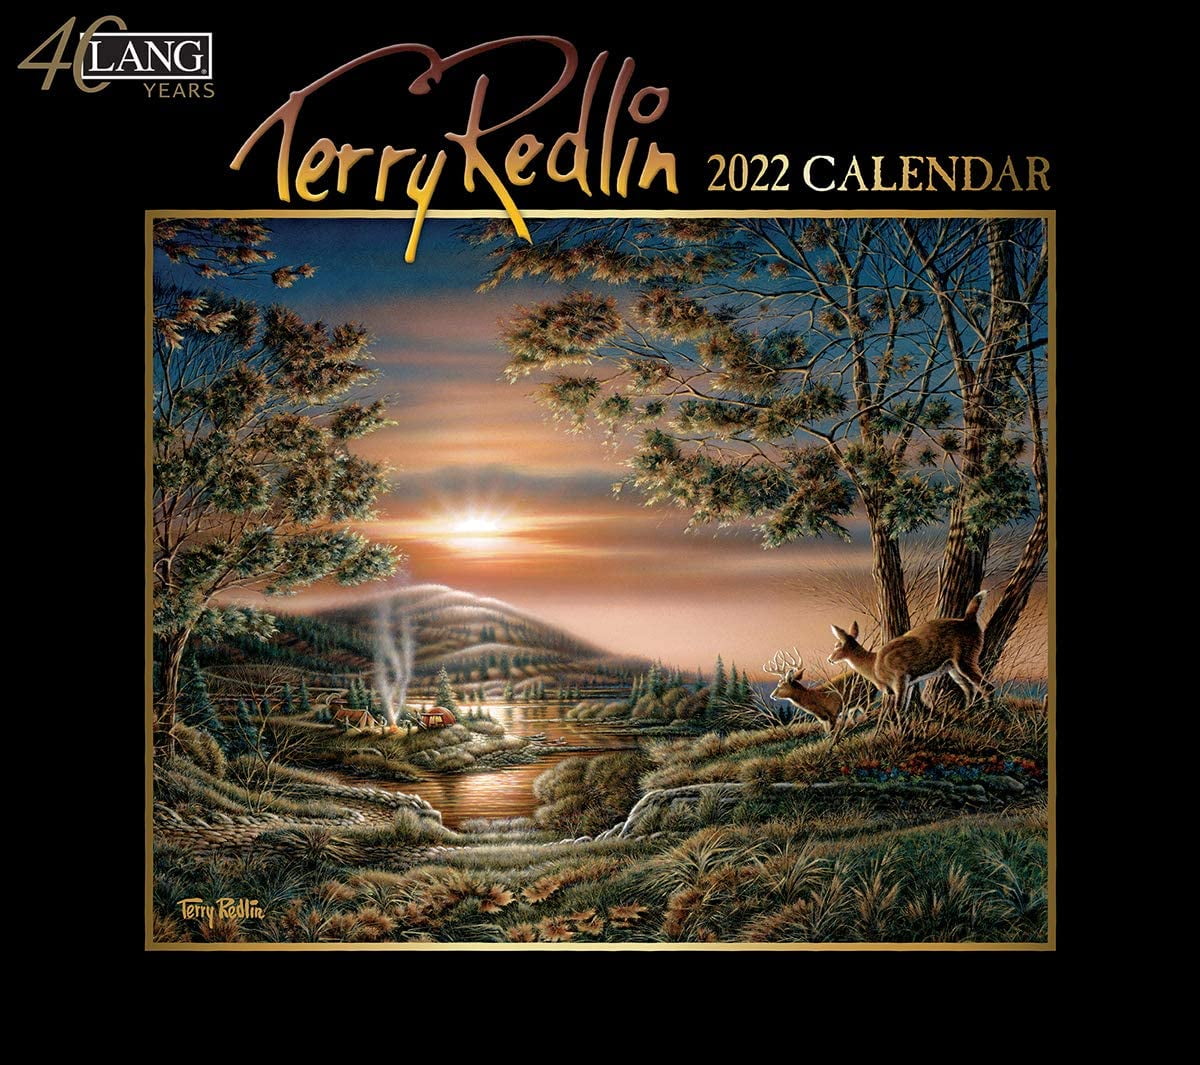 Lang American Dream 2022 Wall Calendar 22991001890 